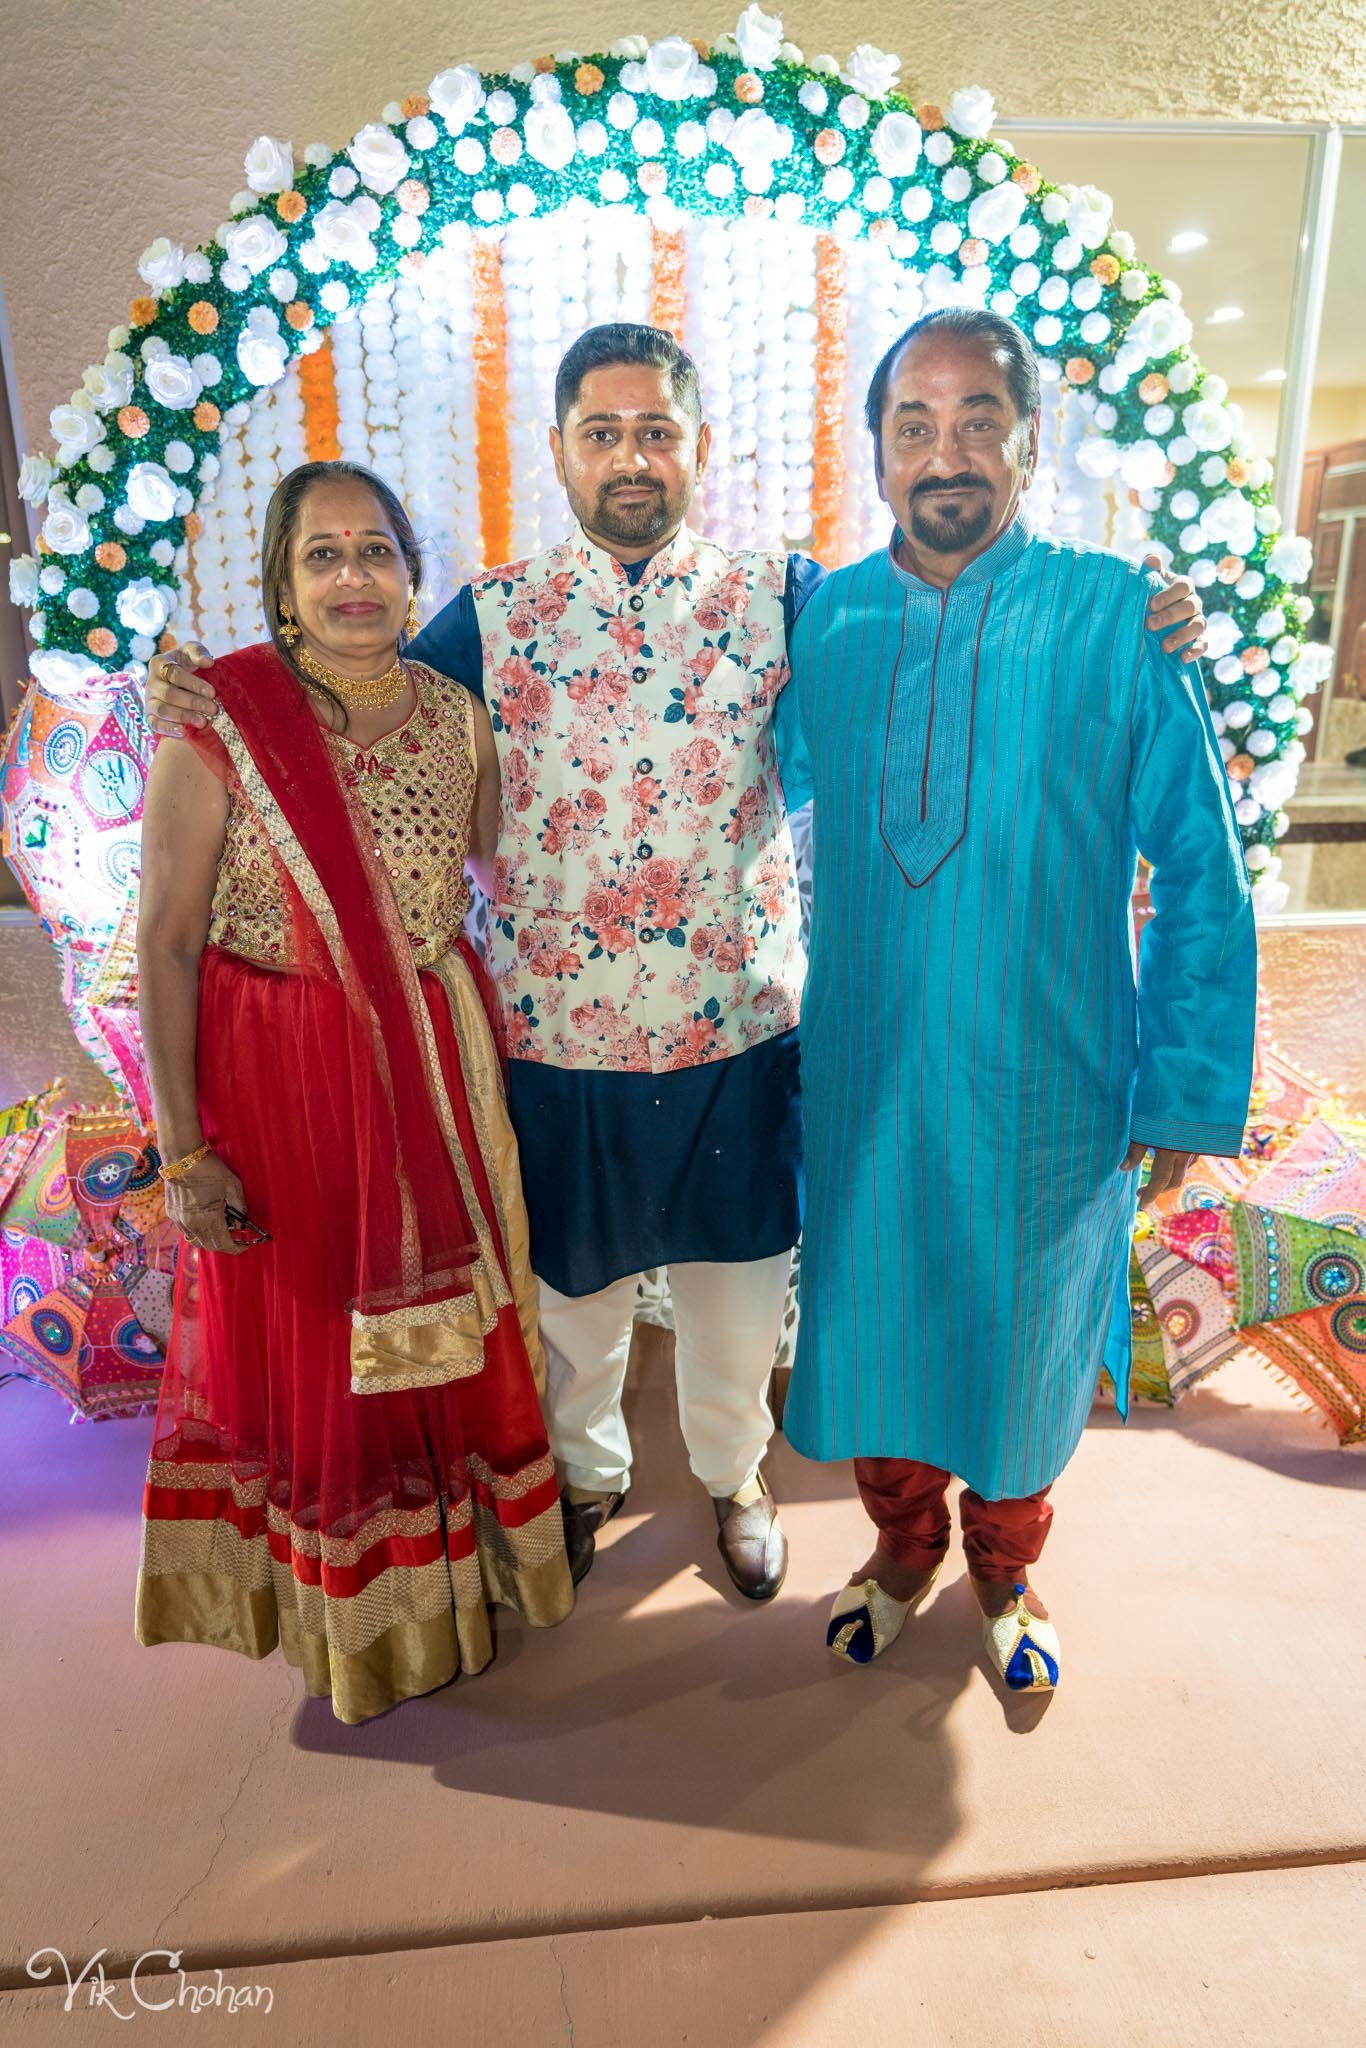 2022-02-04-Hely-&-Parth-Garba-Night-Indian-Wedding-Vik-Chohan-Photography-Photo-Booth-Social-Media-VCP-072.jpg